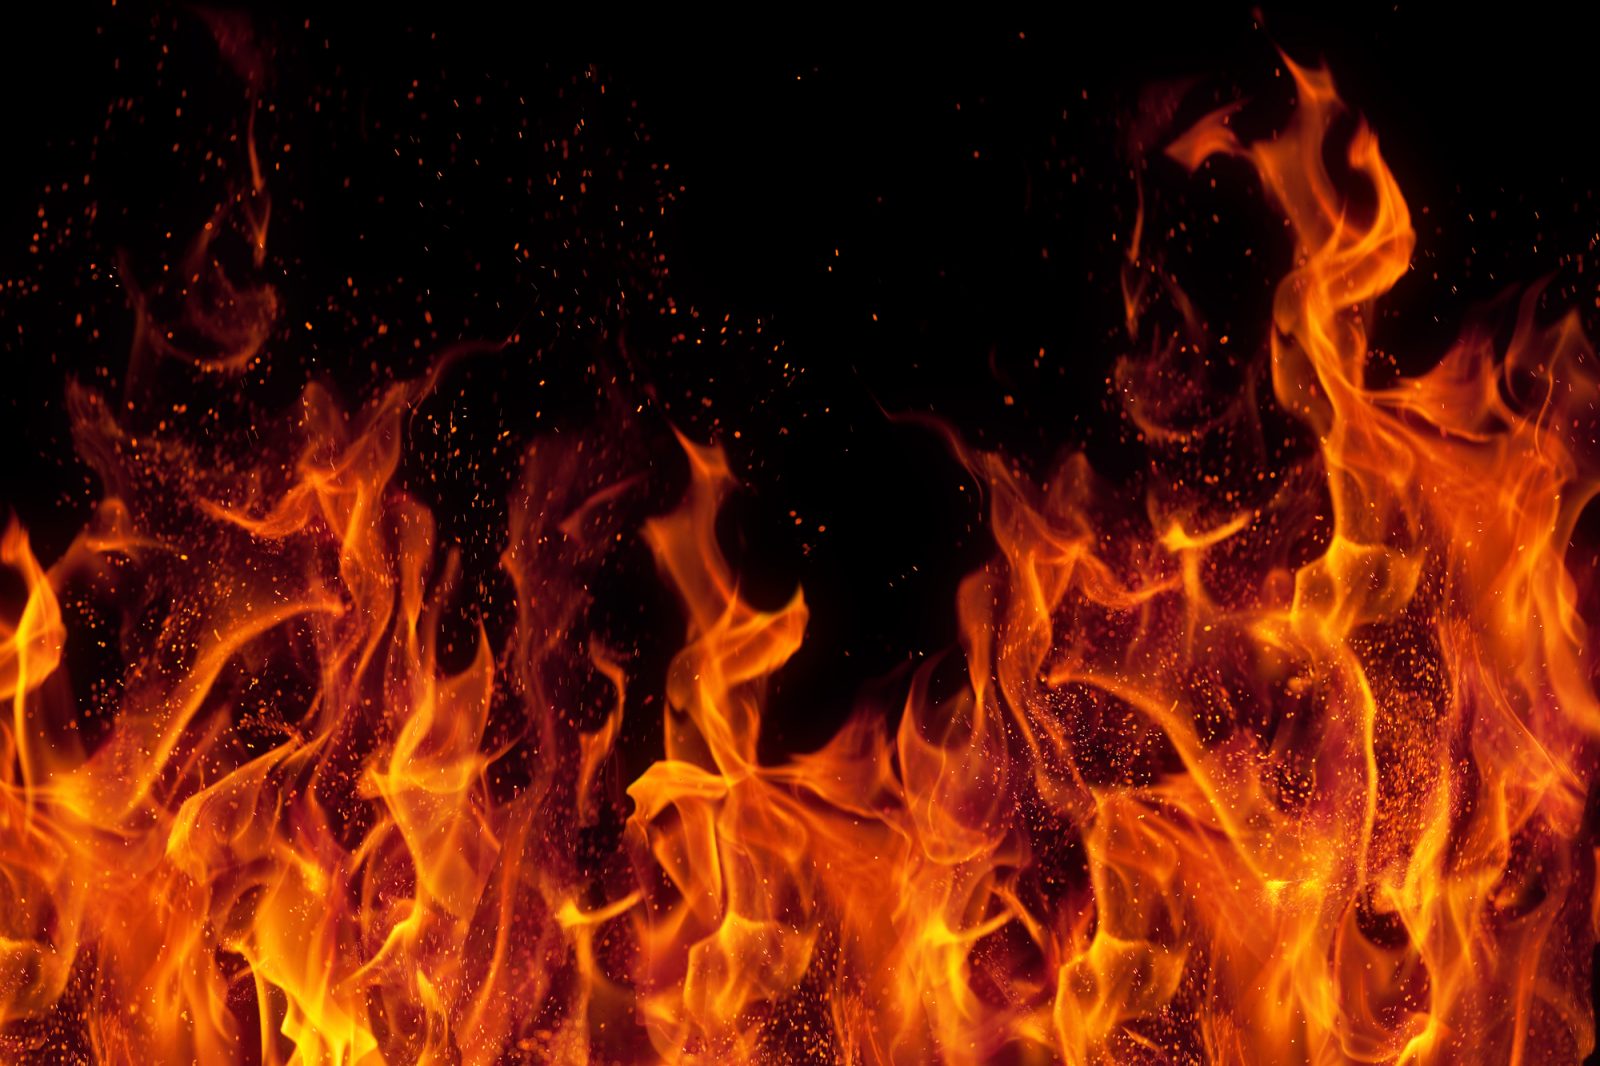 South Stormont institutes burn ban